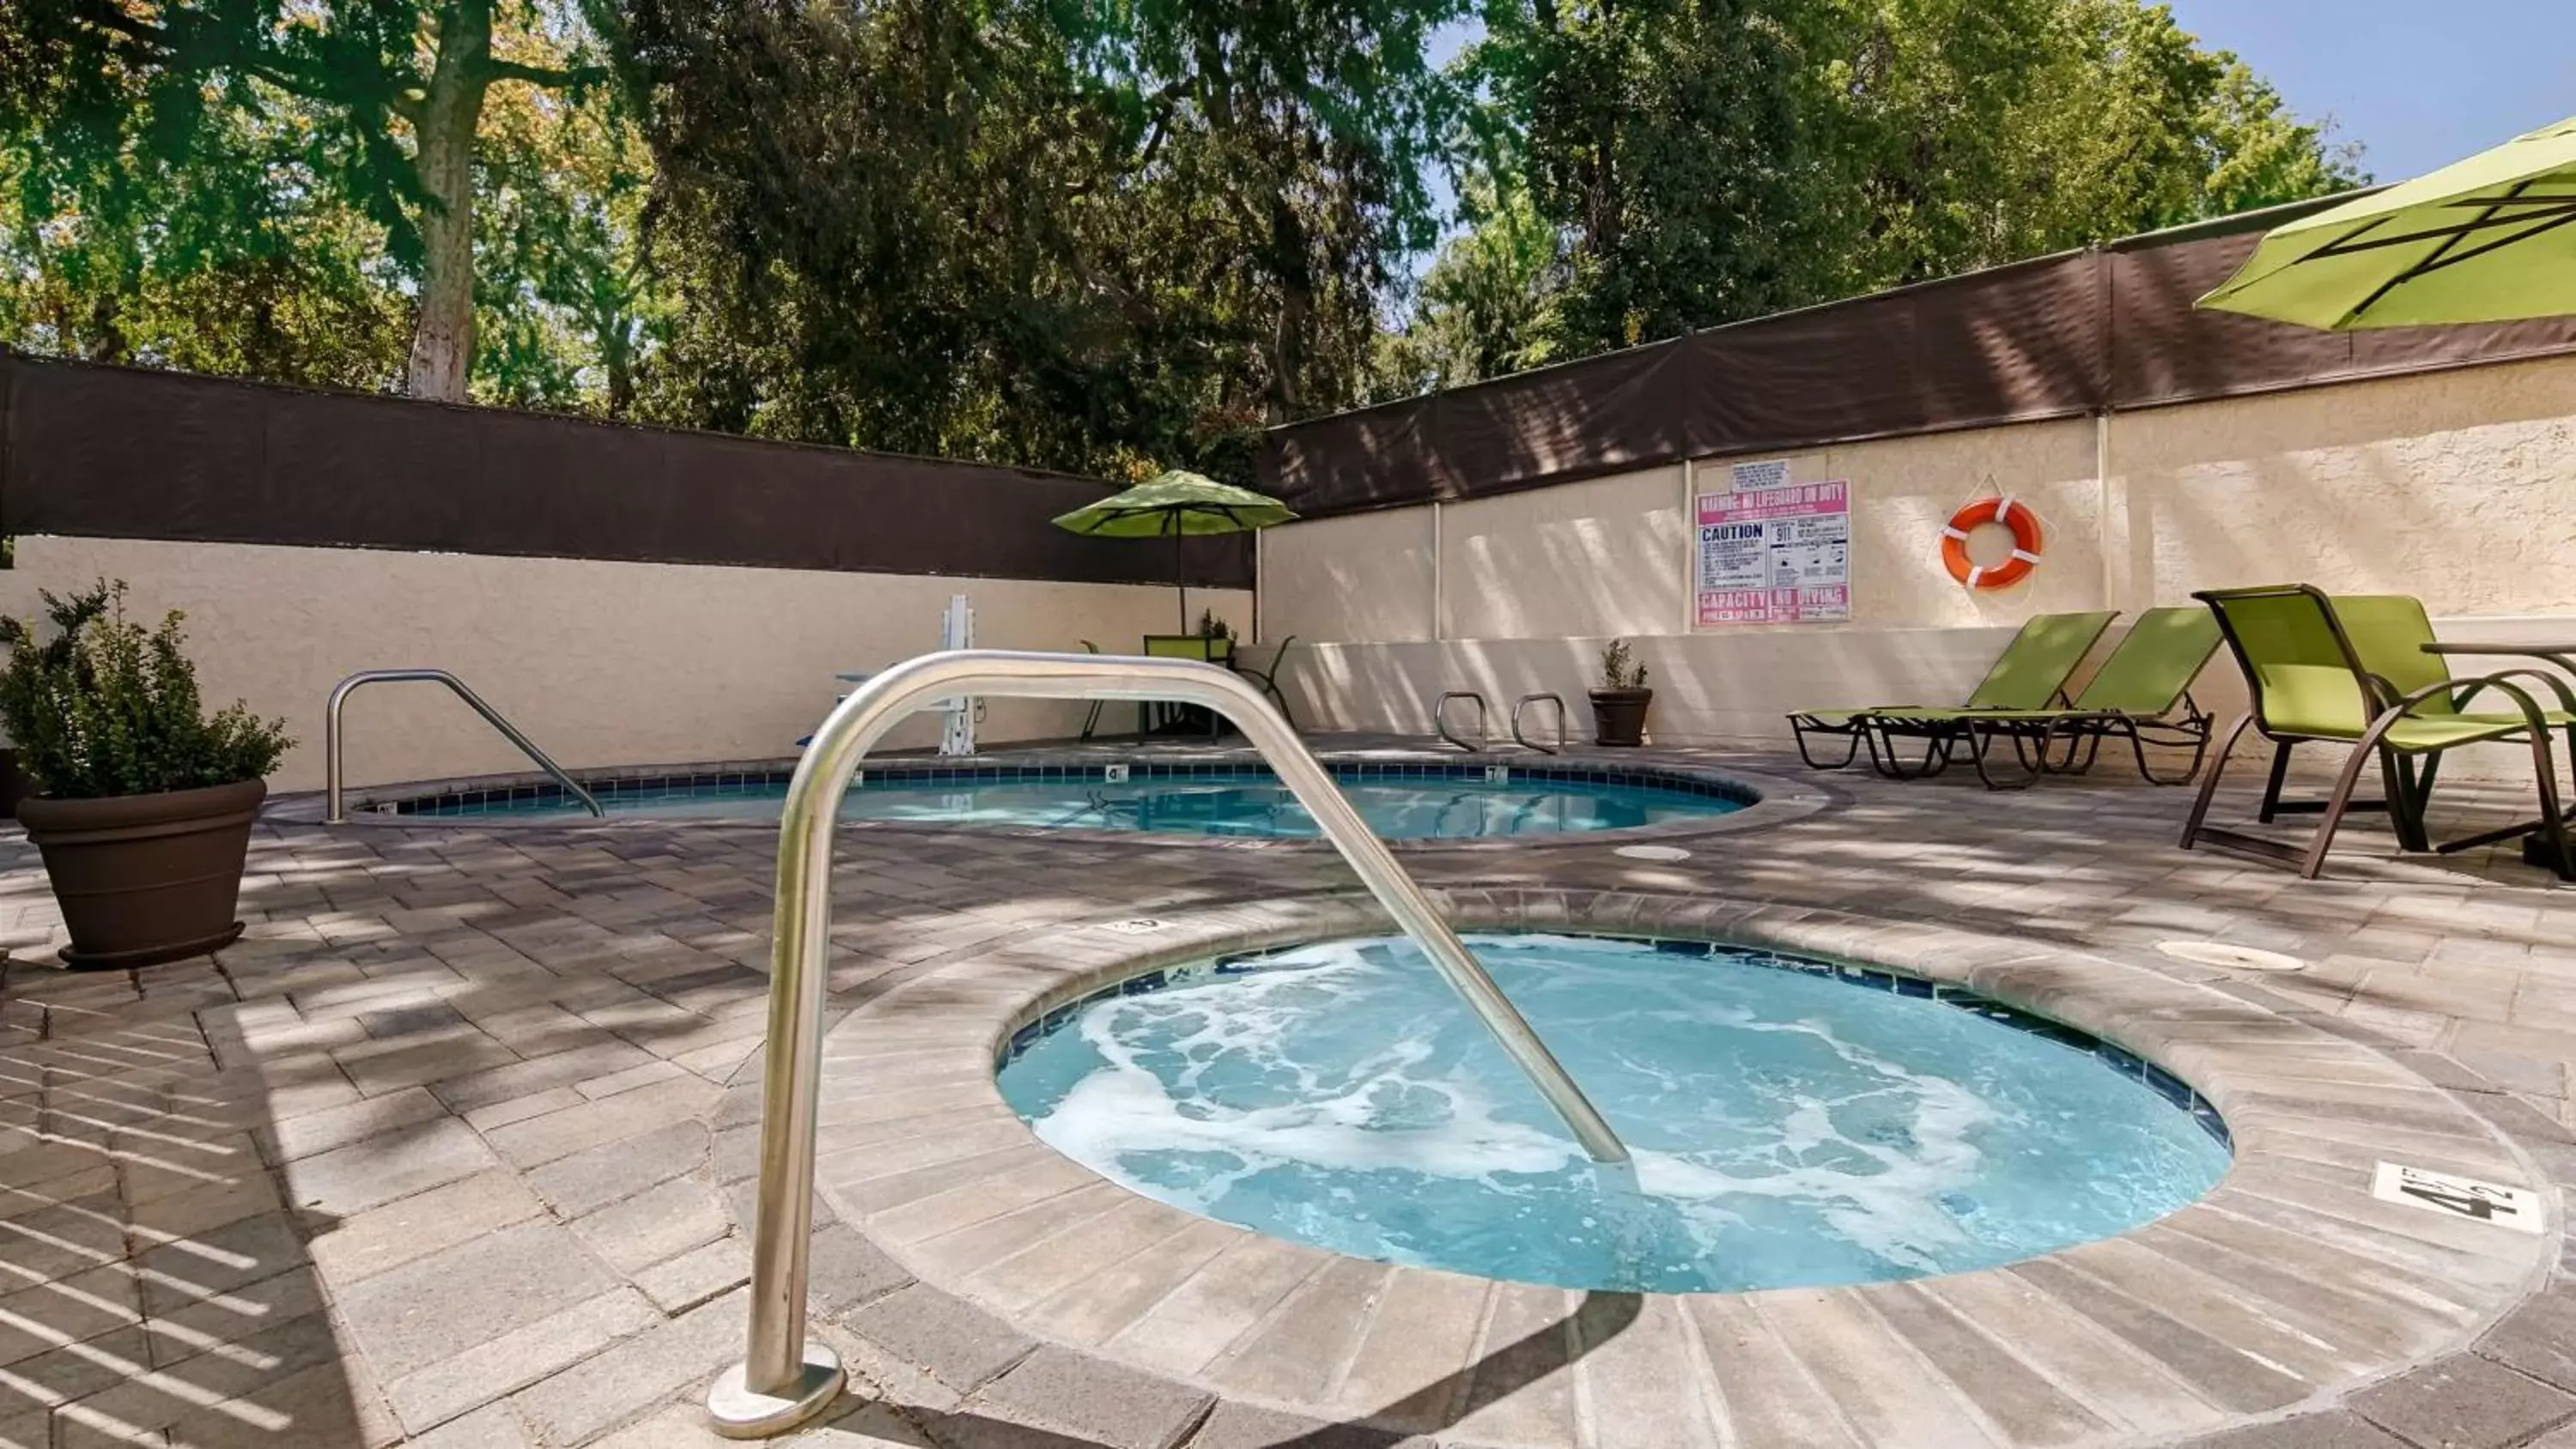 On site, Swimming Pool in Best Western Plus Glendale